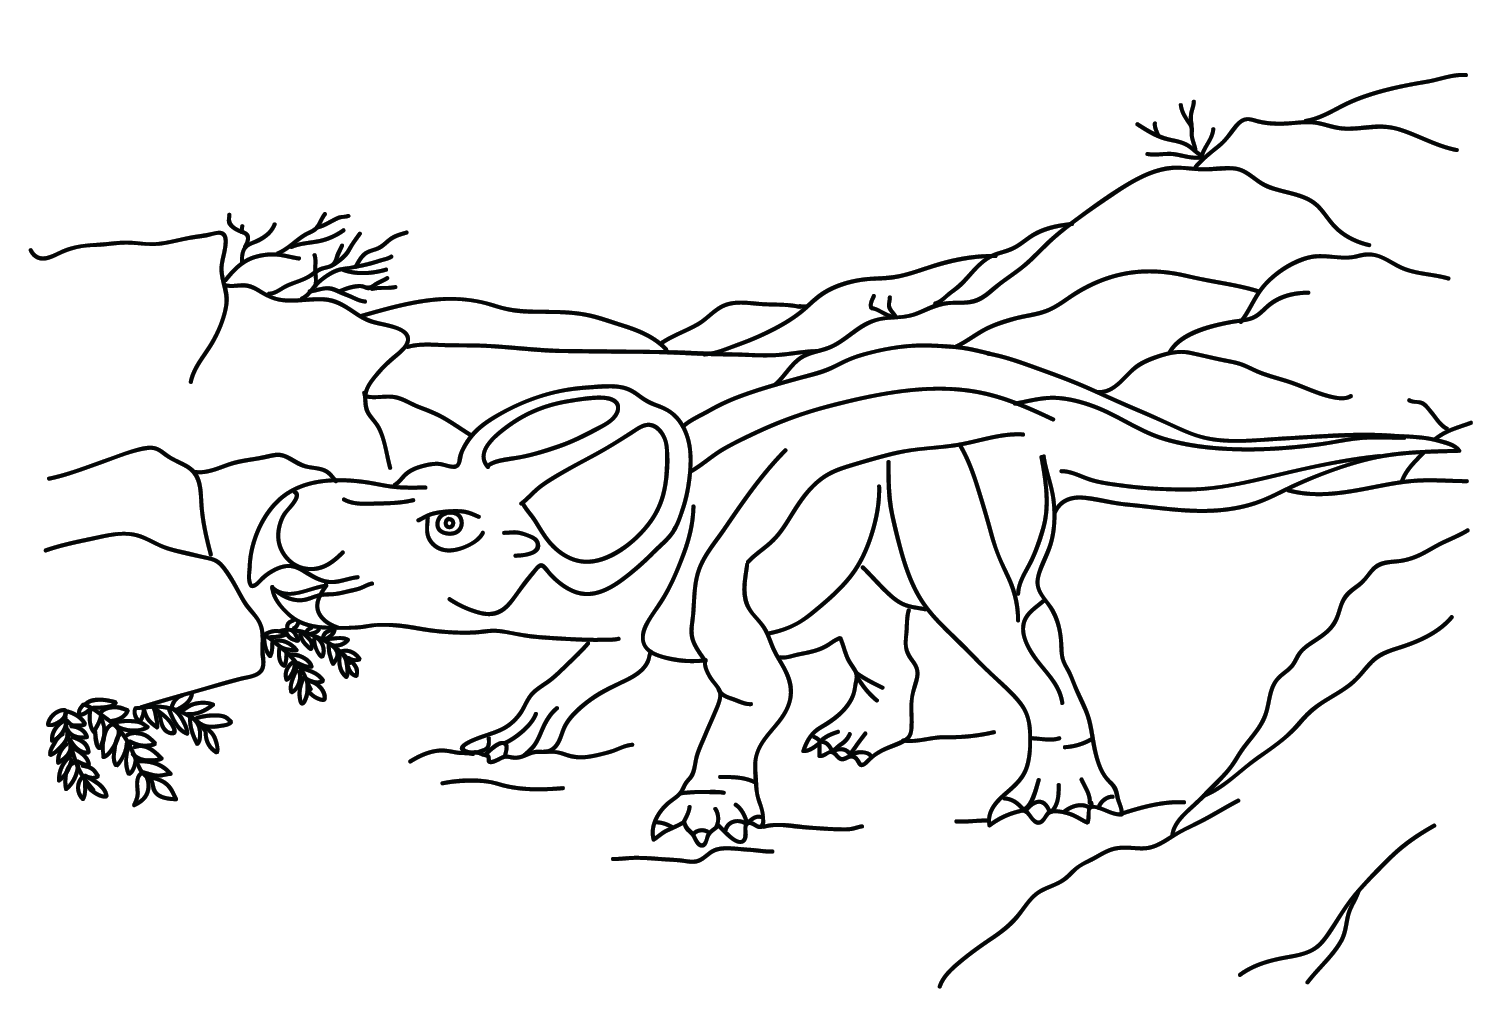 Protoceratops-Vektorbild-Malvorlage von Protoceratops